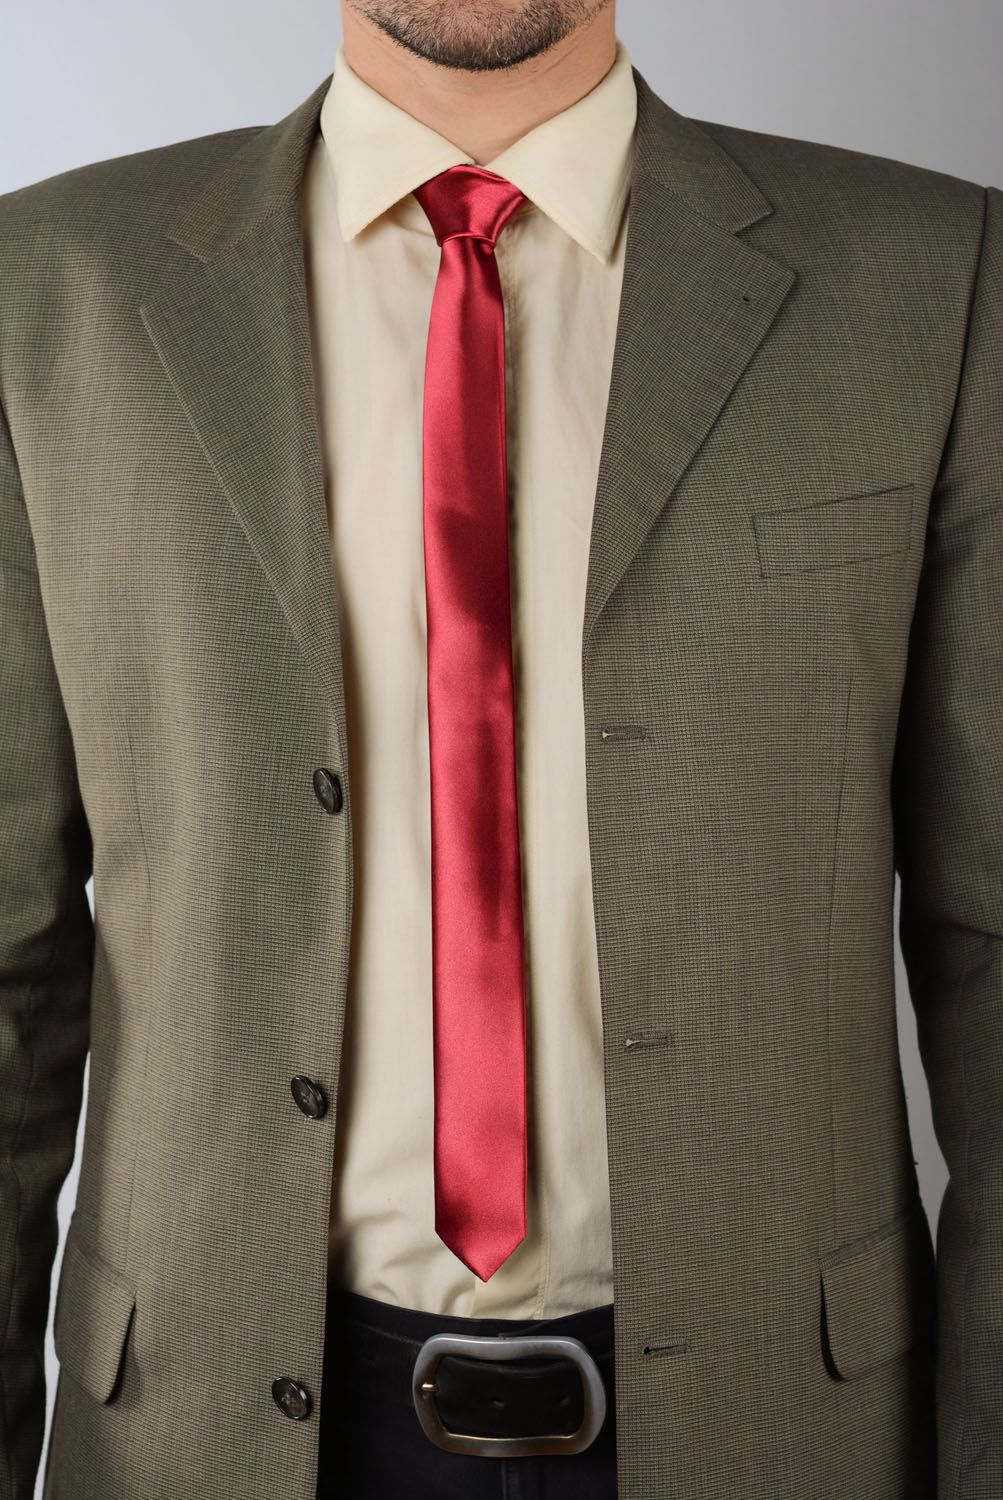 Cravate rouge en satin faite main photo 1